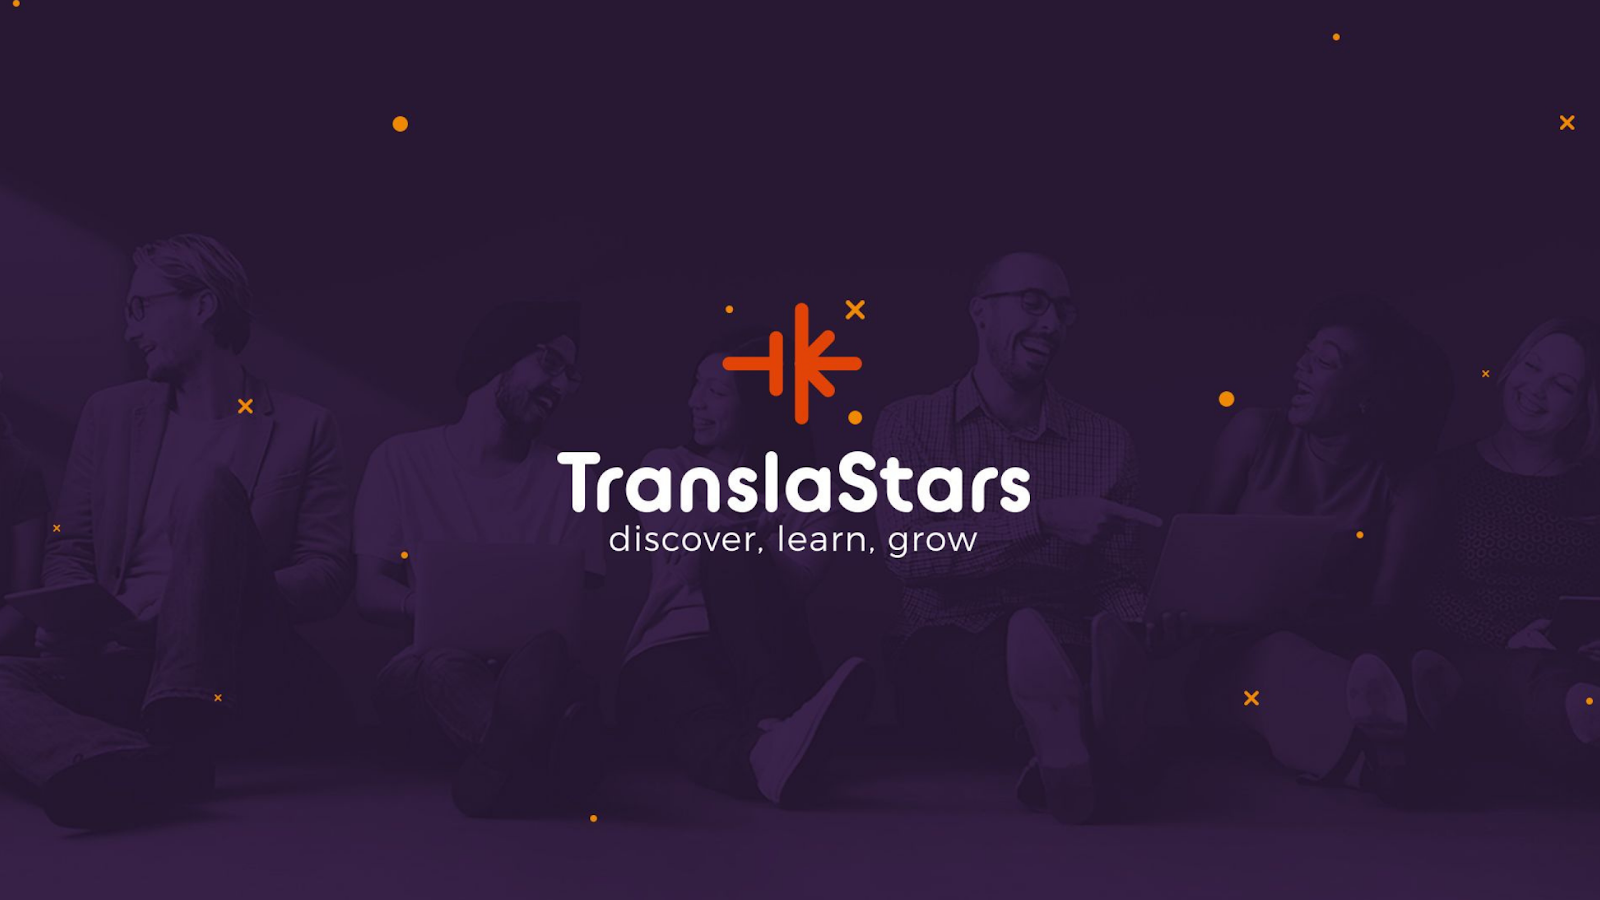 TranslaStars